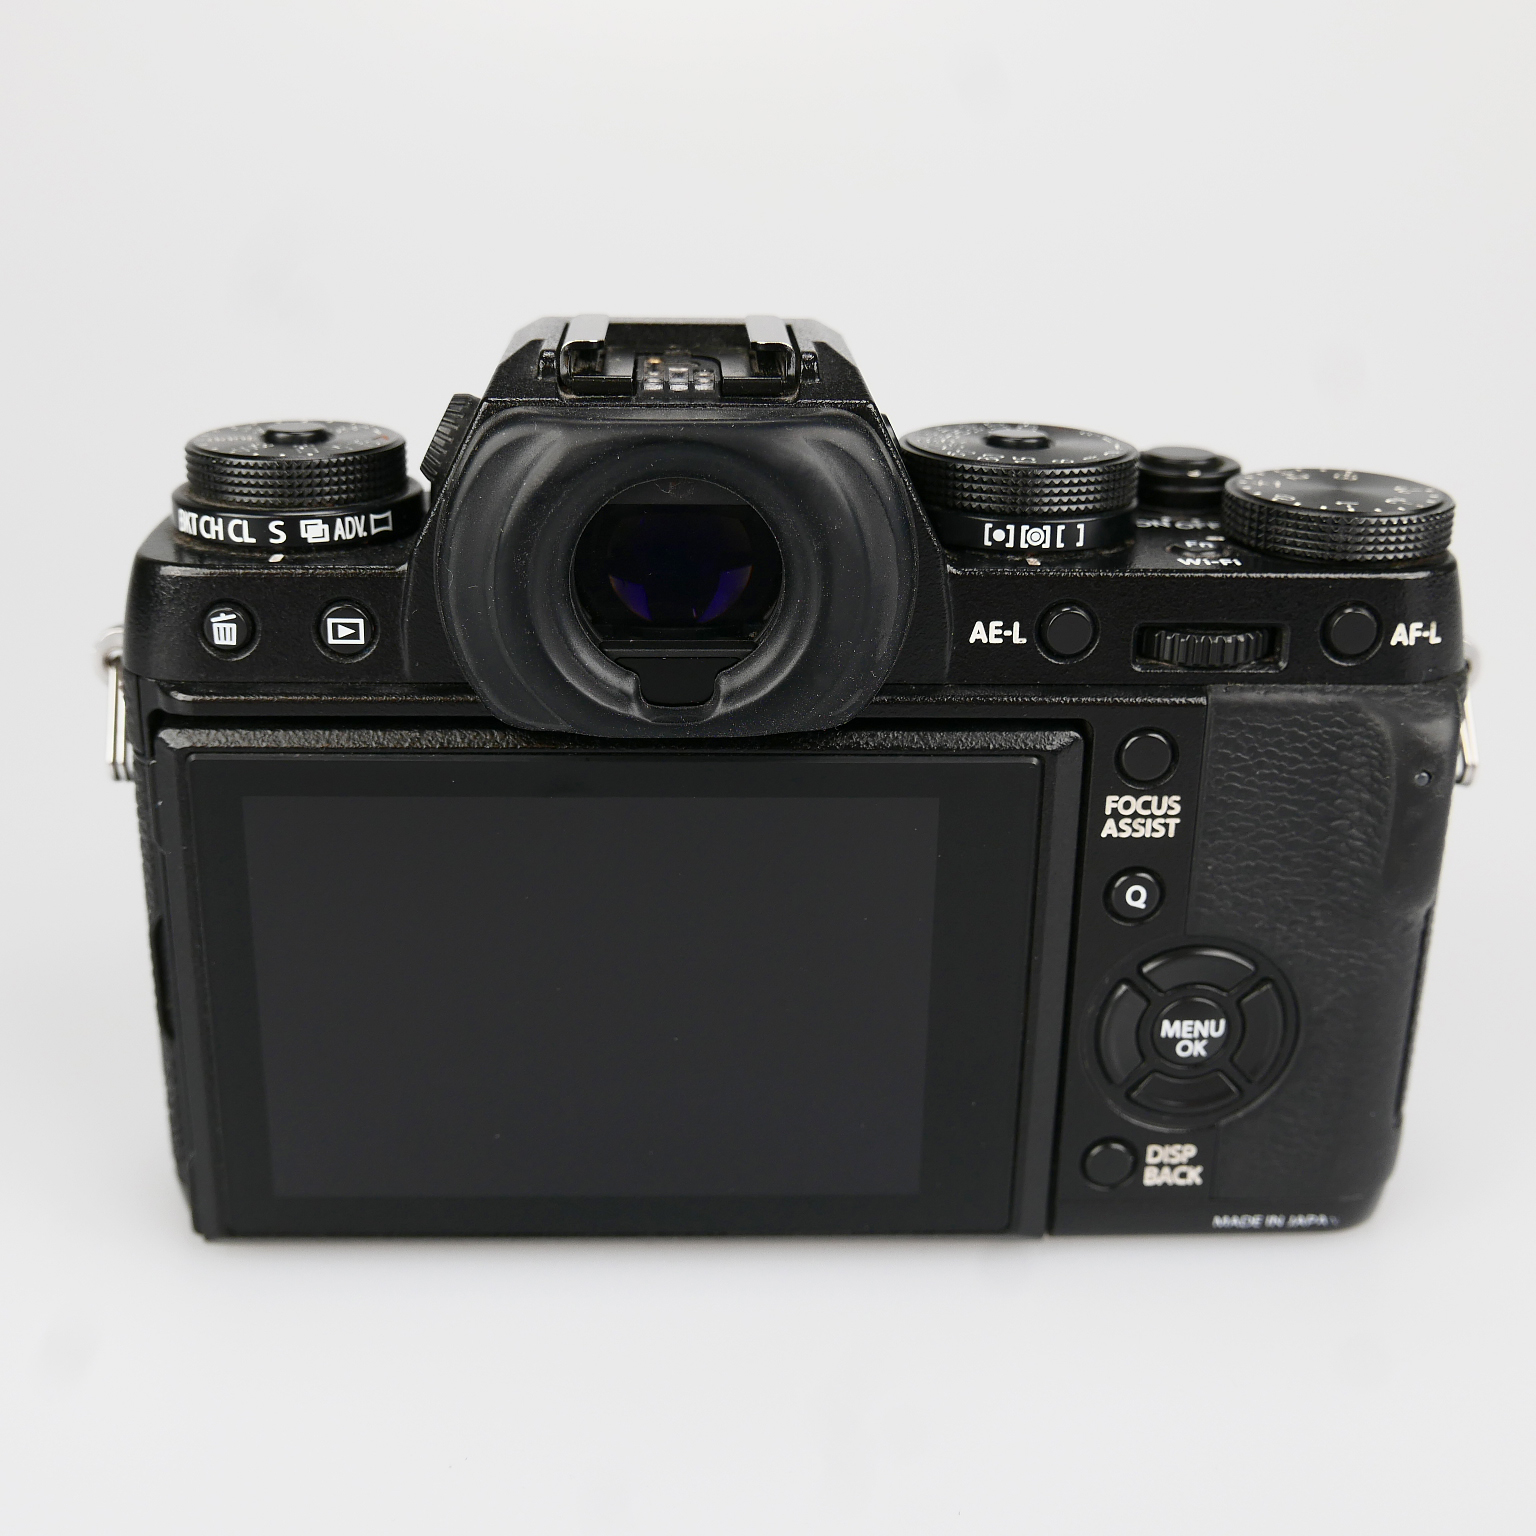 (Myyty) Fujifilm X-T1 runko + VG-XT1 akkukahva (SC: 10650) (Käytetty)